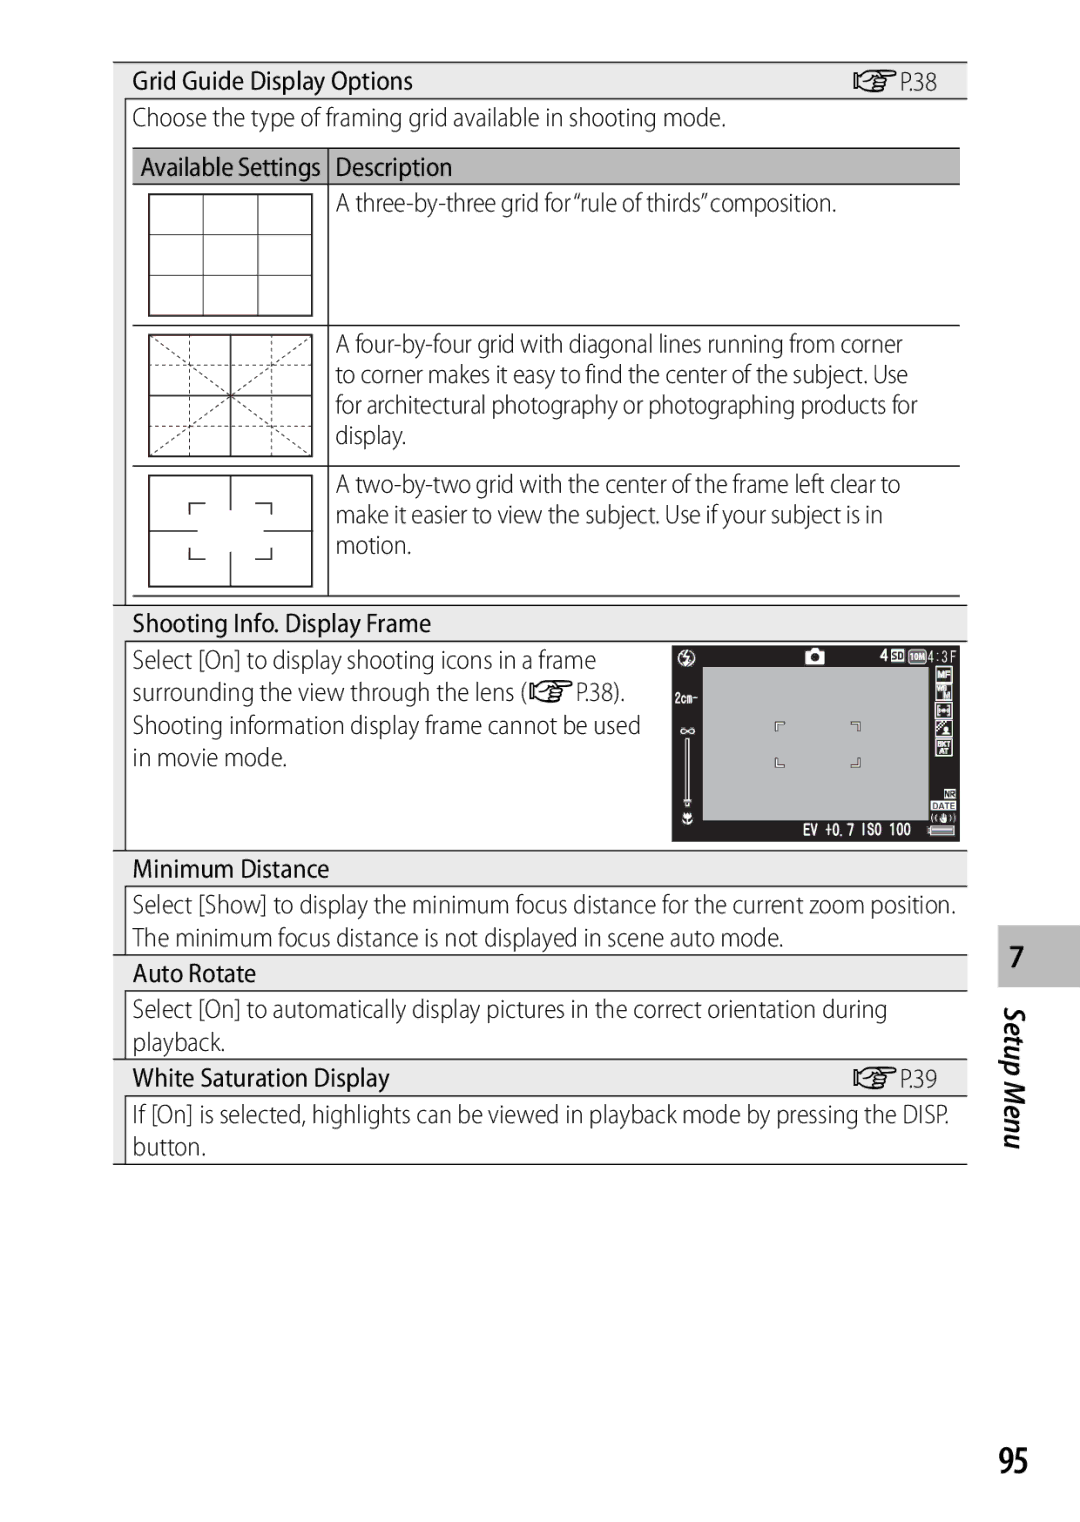 Ricoh CX3 manual Grid Guide Display Options GP.38, Motion Shooting Info. Display Frame, Minimum Distance 